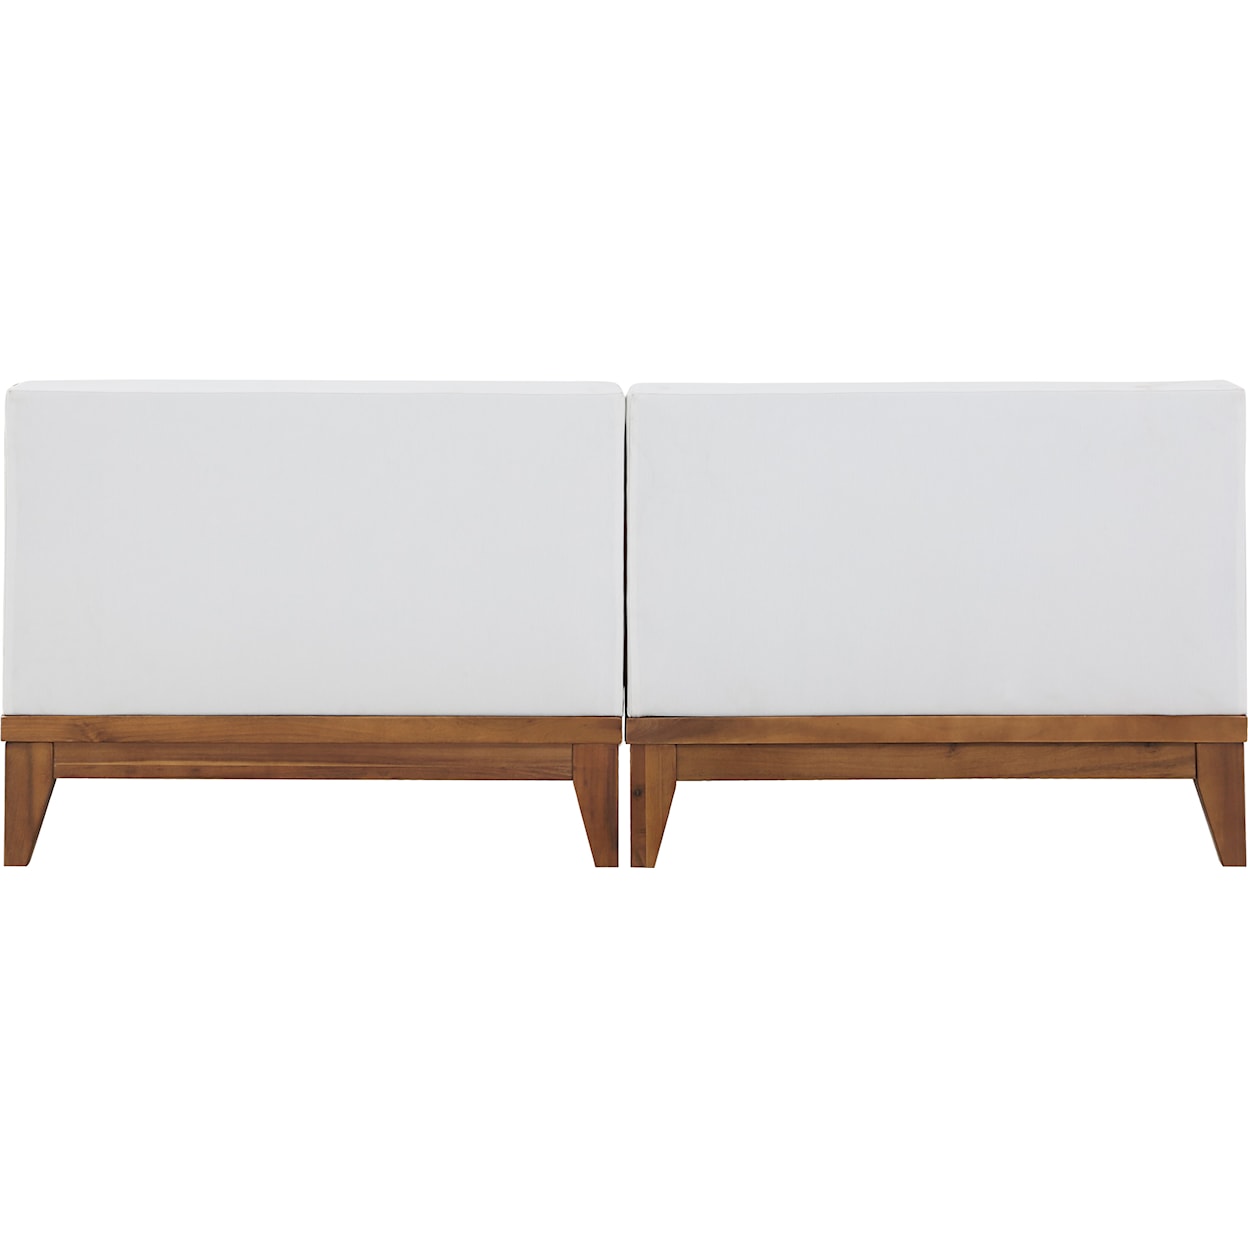 Meridian Furniture Rio Modular Sofa